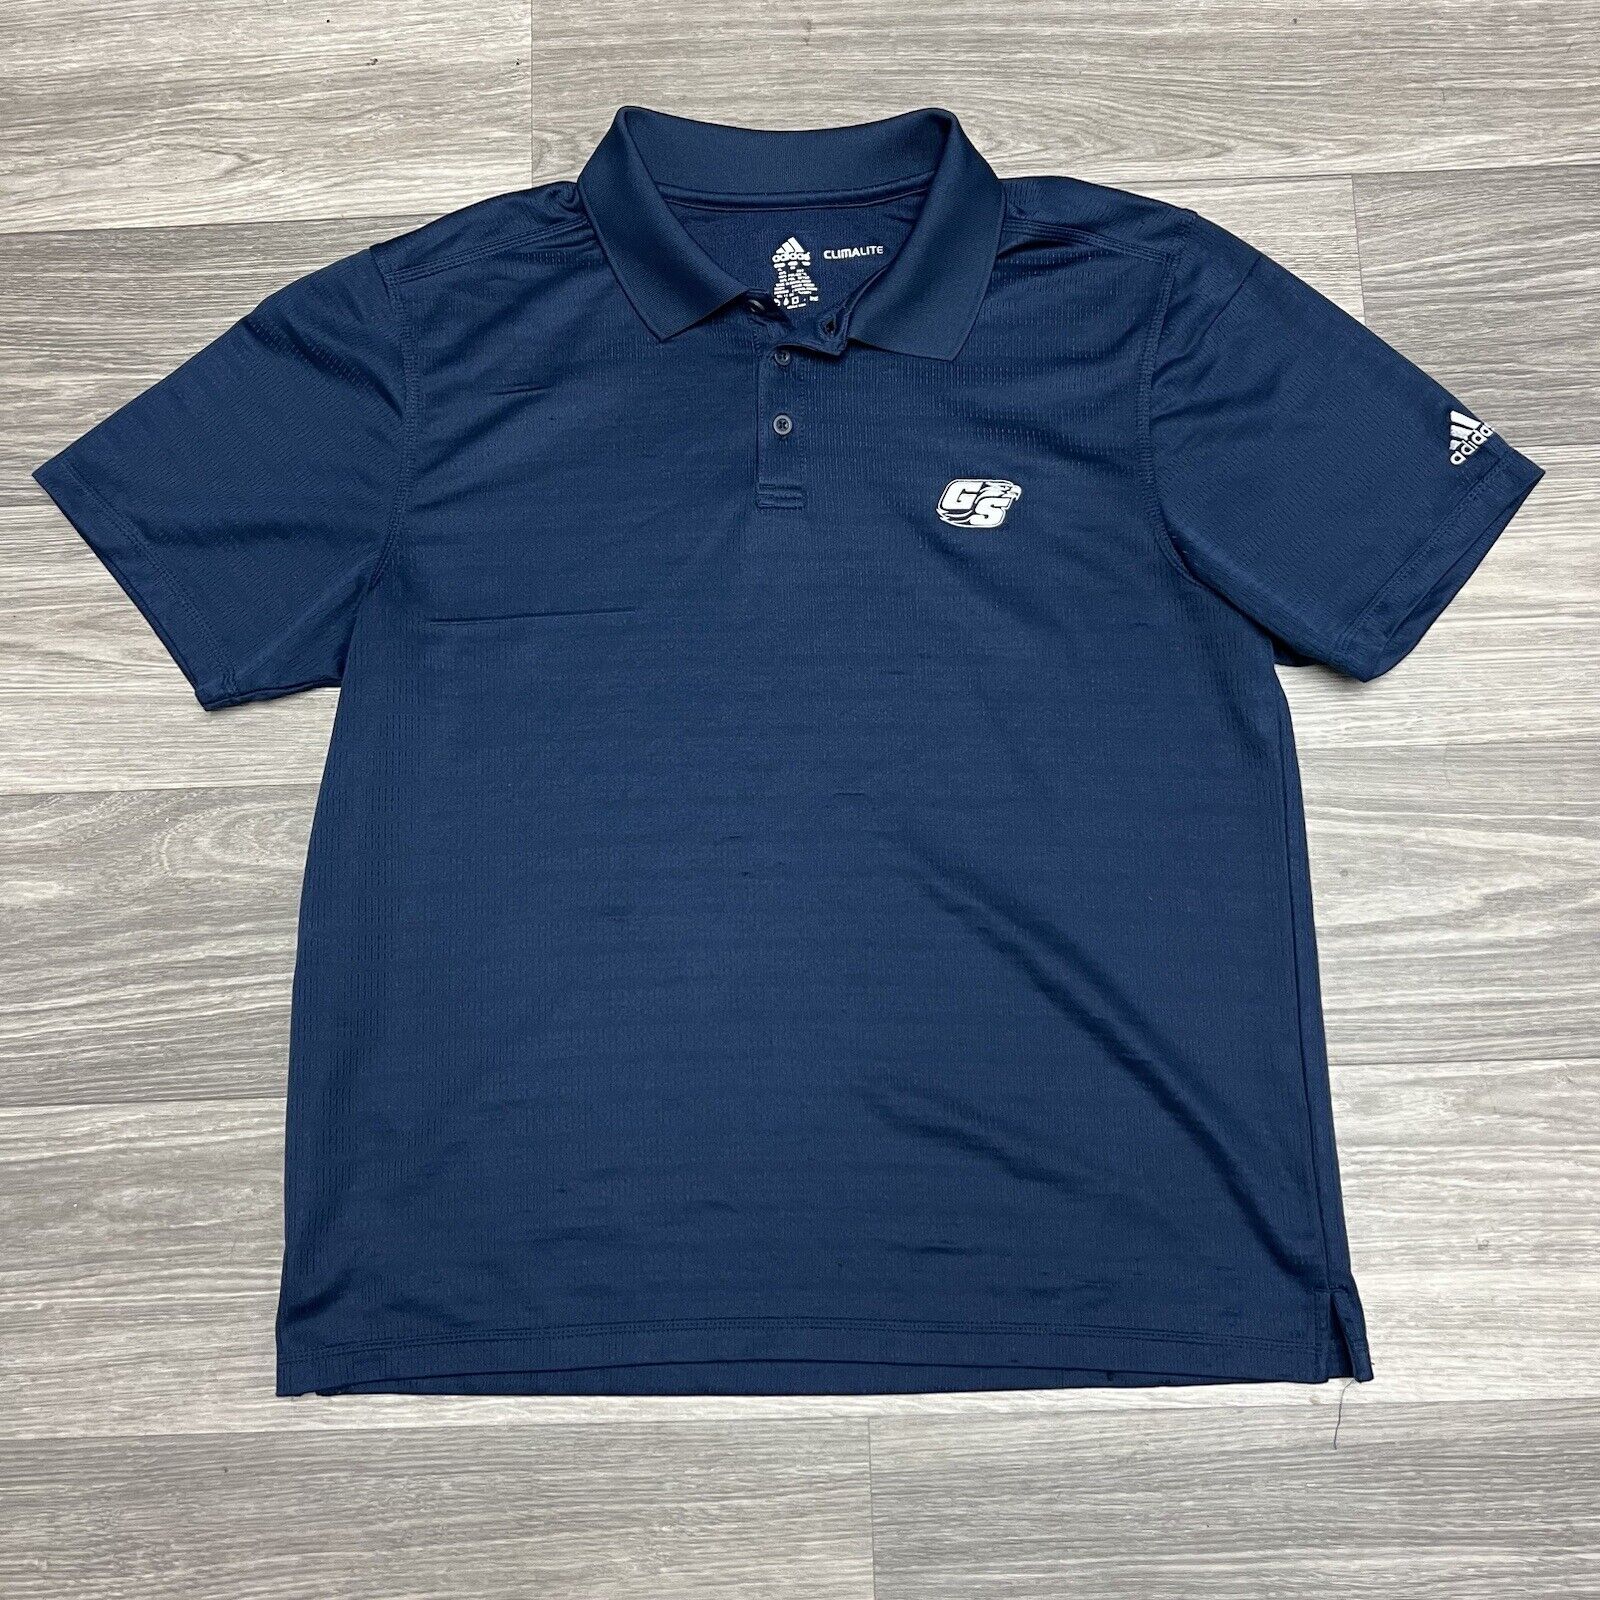 Adidas Climalite Golf Polo Shirt Mens XL Georgia Southern Embroidered Navy Blue